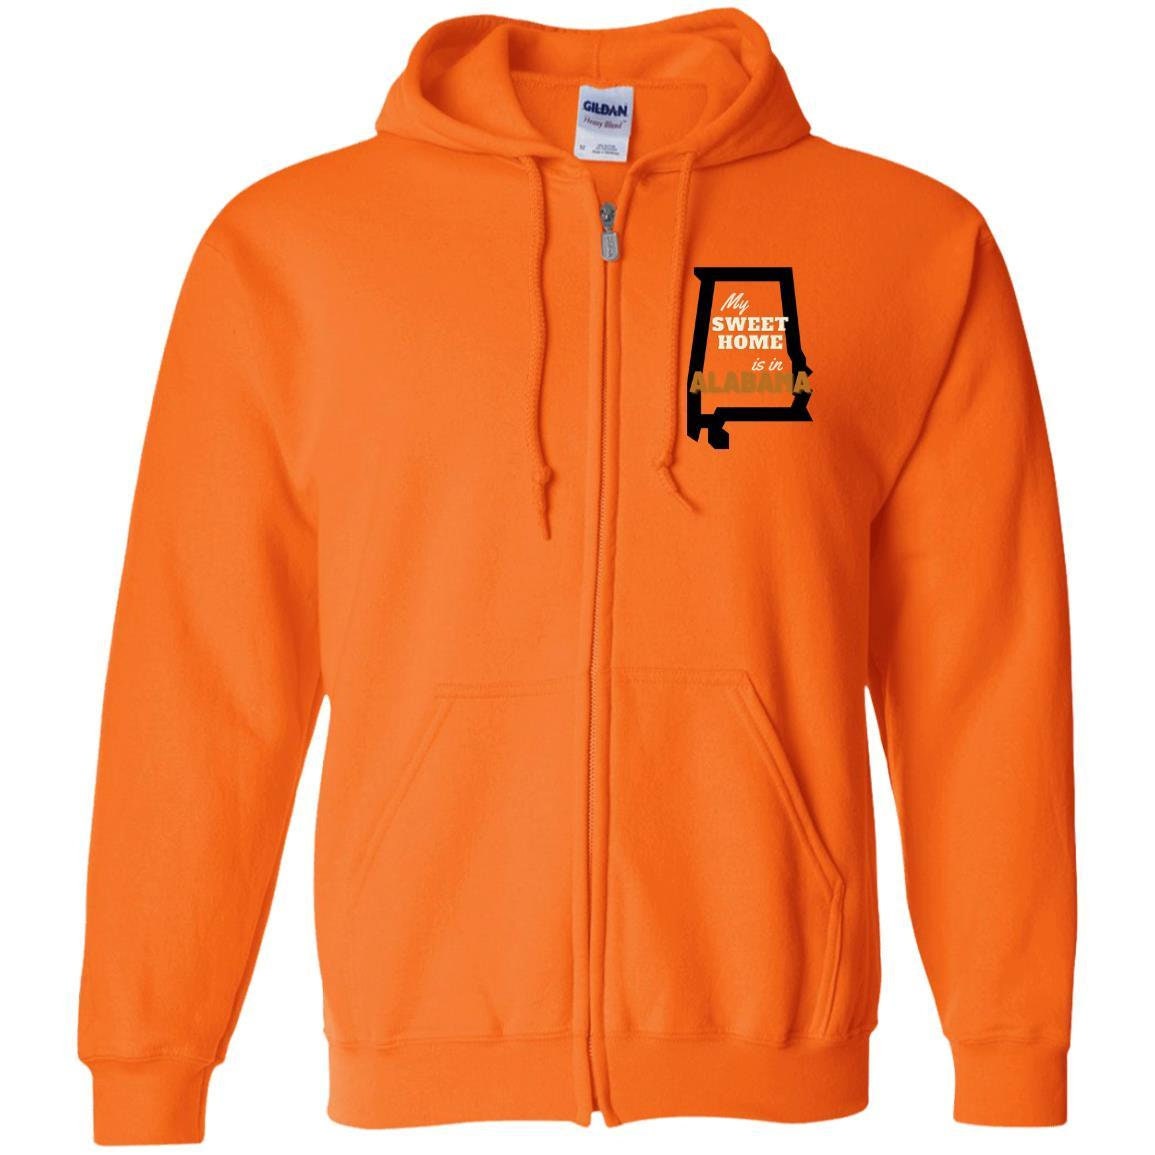 Alabama Zip Up Hooded Sweatshirt | Alabama Clothing | GIFTS FOR HIM or her